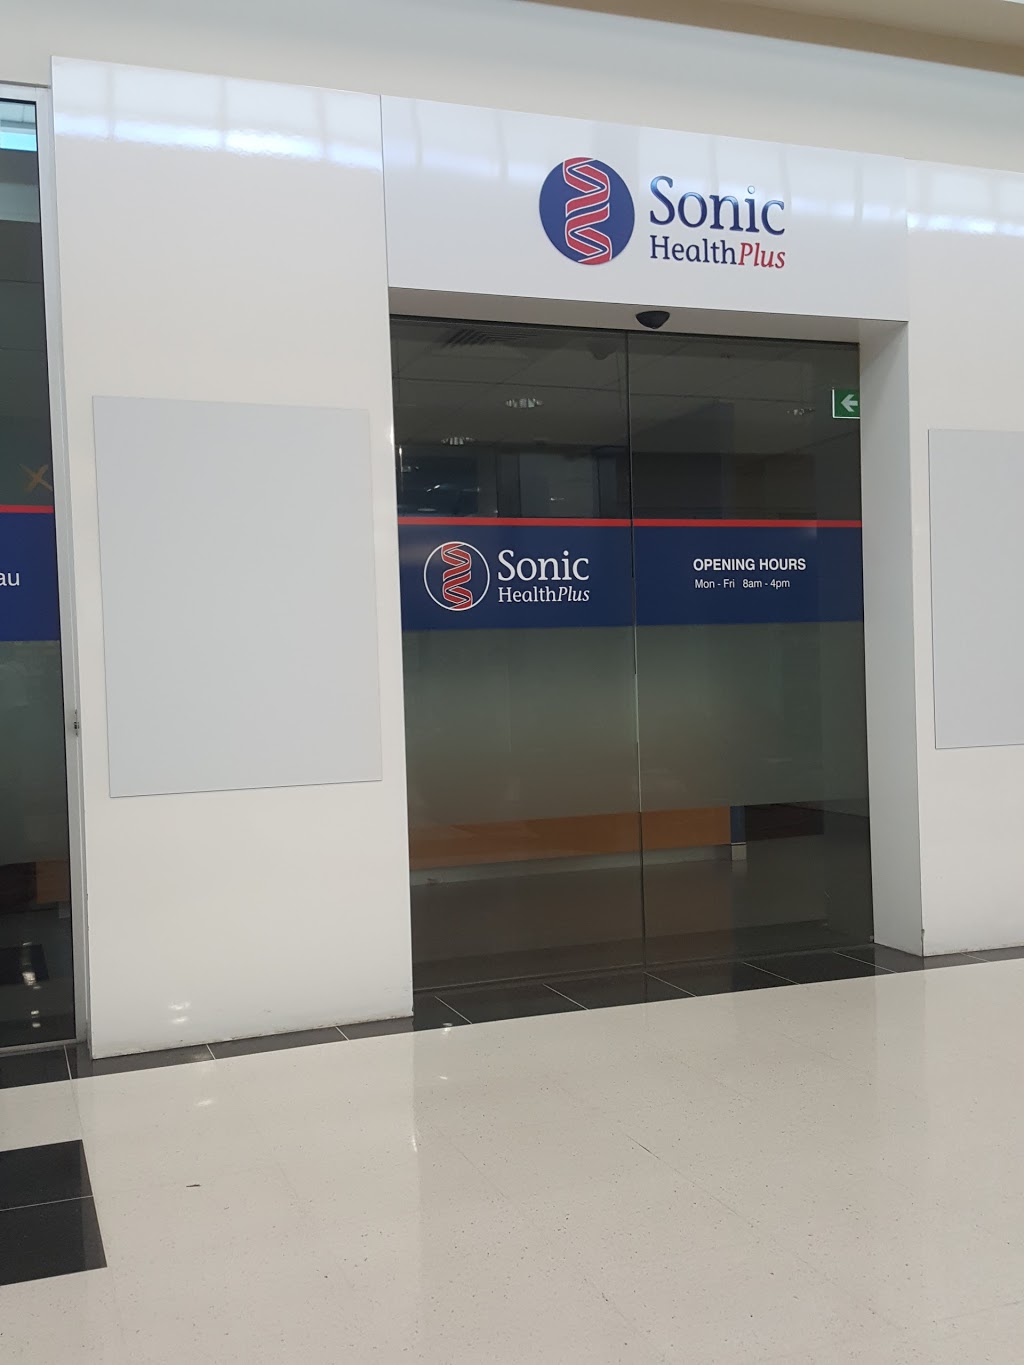 Sonic HealthPlus Brisbane Airport | Shop 6/8, Skygate Centre, 1-7 The Circuit, Brisbane Airport QLD 4008, Australia | Phone: (07) 3291 8990